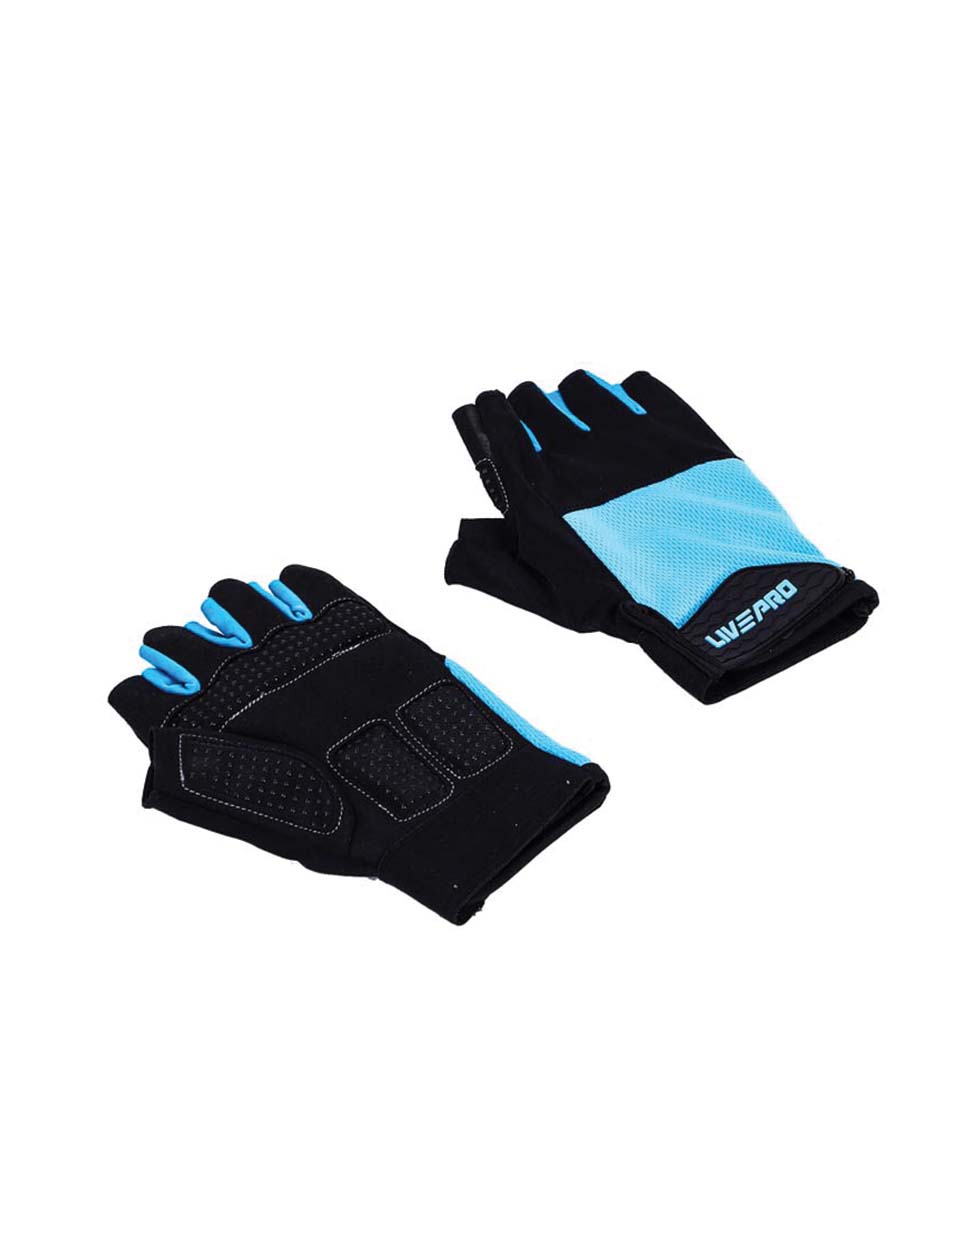 LivePro Fitness Gloves - Athletix.ae